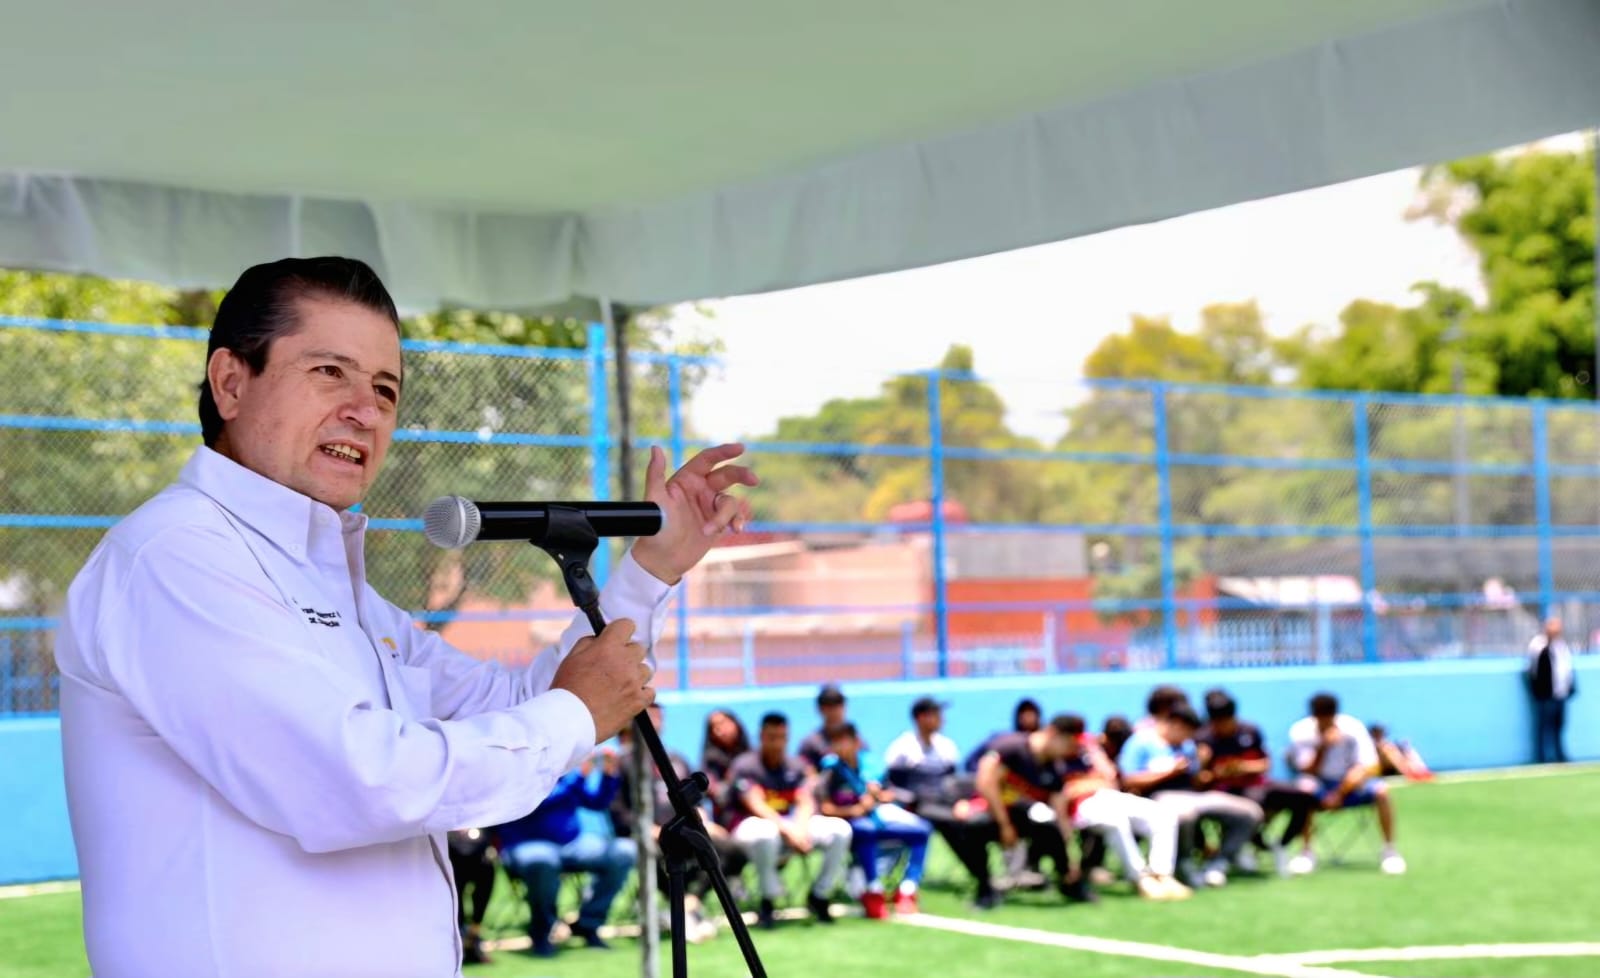 Giovani Gutiérrez reinaugura el polideportivo "Los Culhuacanes"